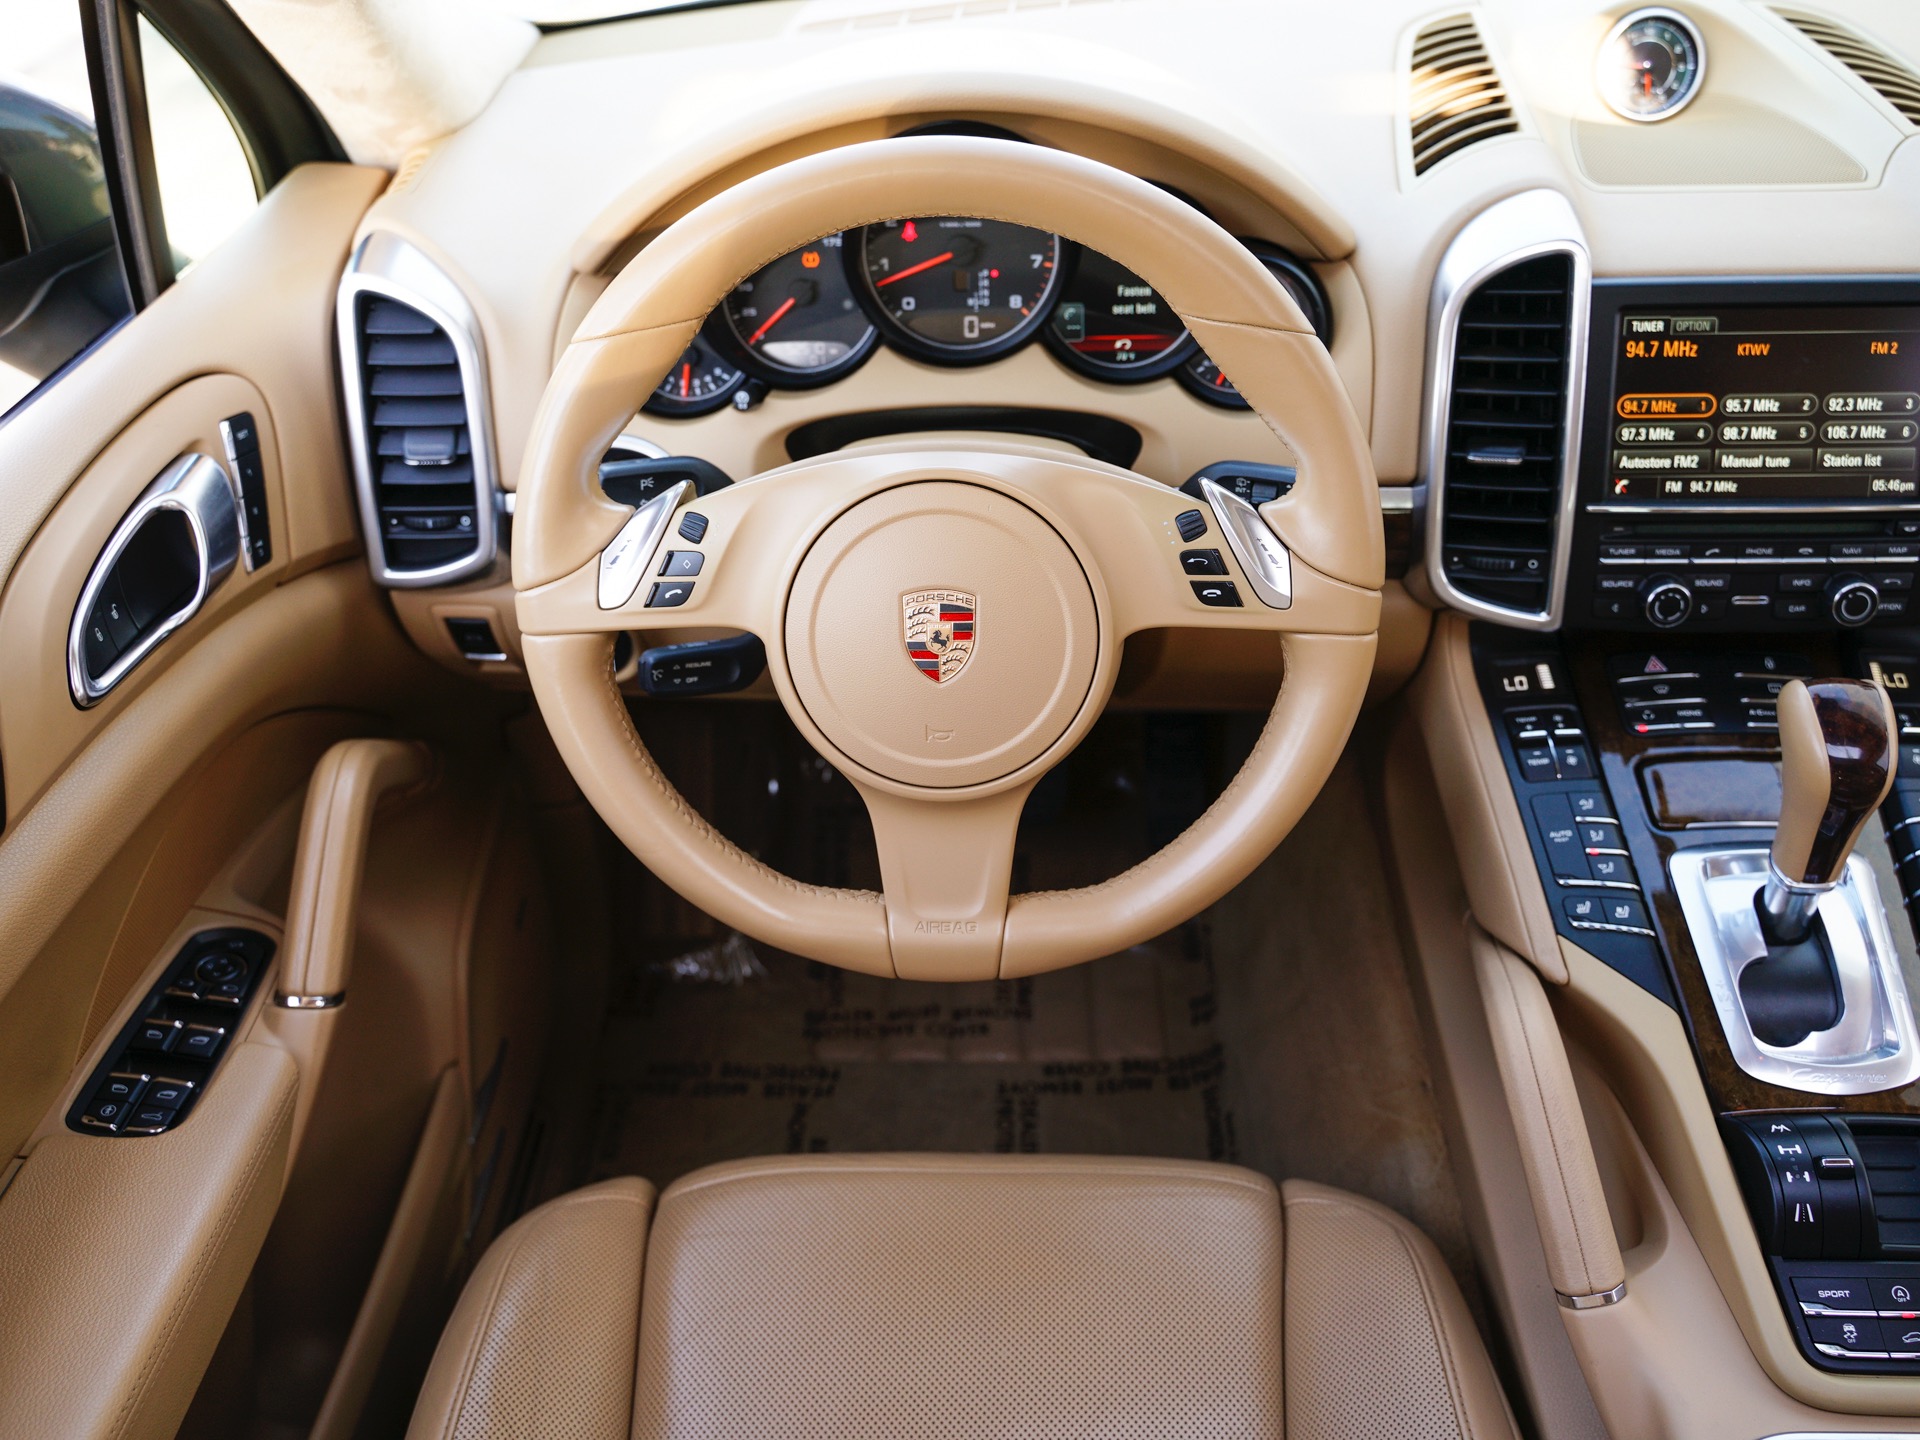 2013 Porsche Cayenne Stock # 6919 for sale near Redondo Beach, CA | CA ...